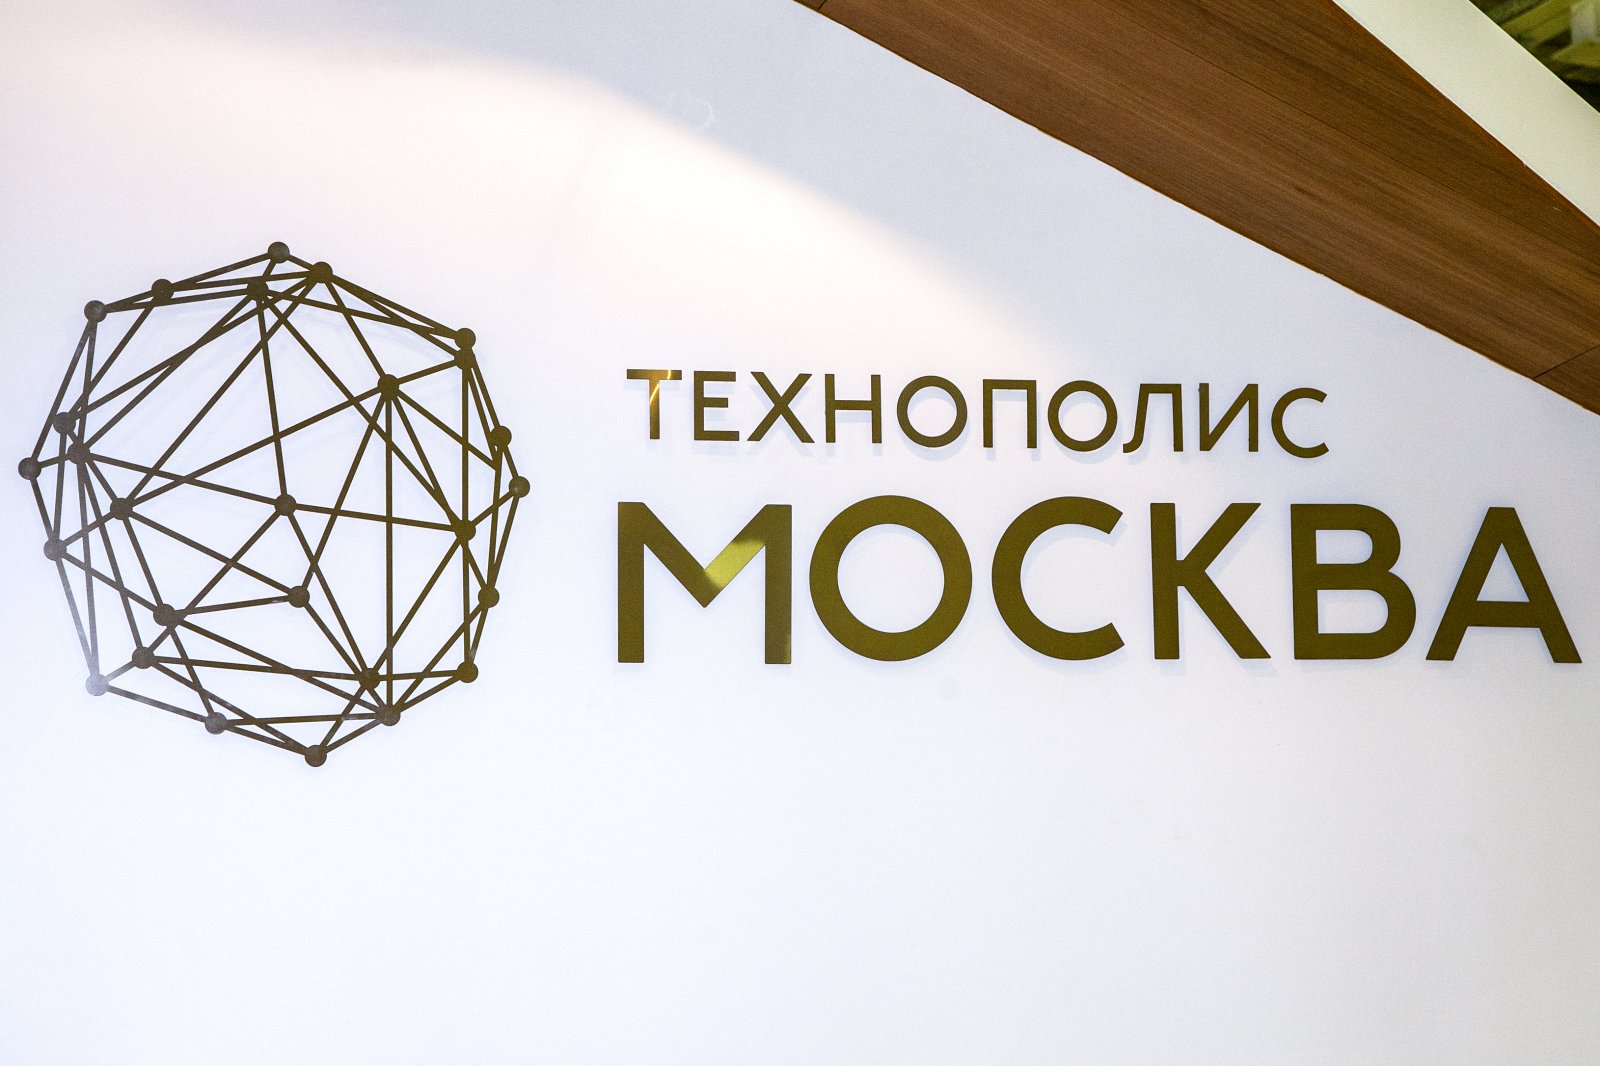 На предприятиях ОЭЗ «Технополис “Москва”» работают более 200 ученых - фото 1